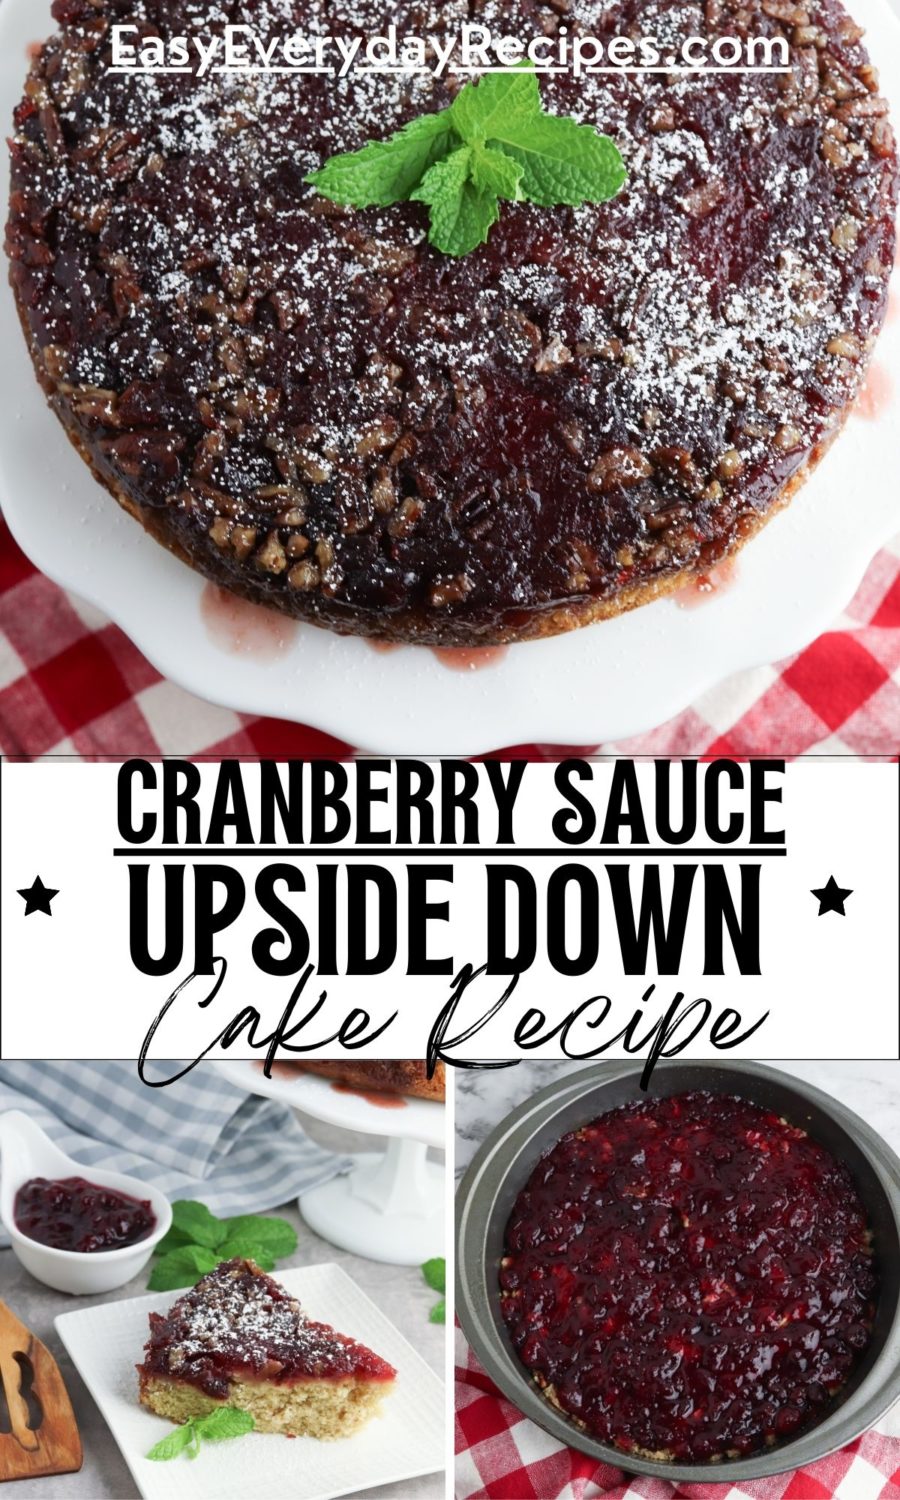 Cranberry sauce upside down cake recipe.